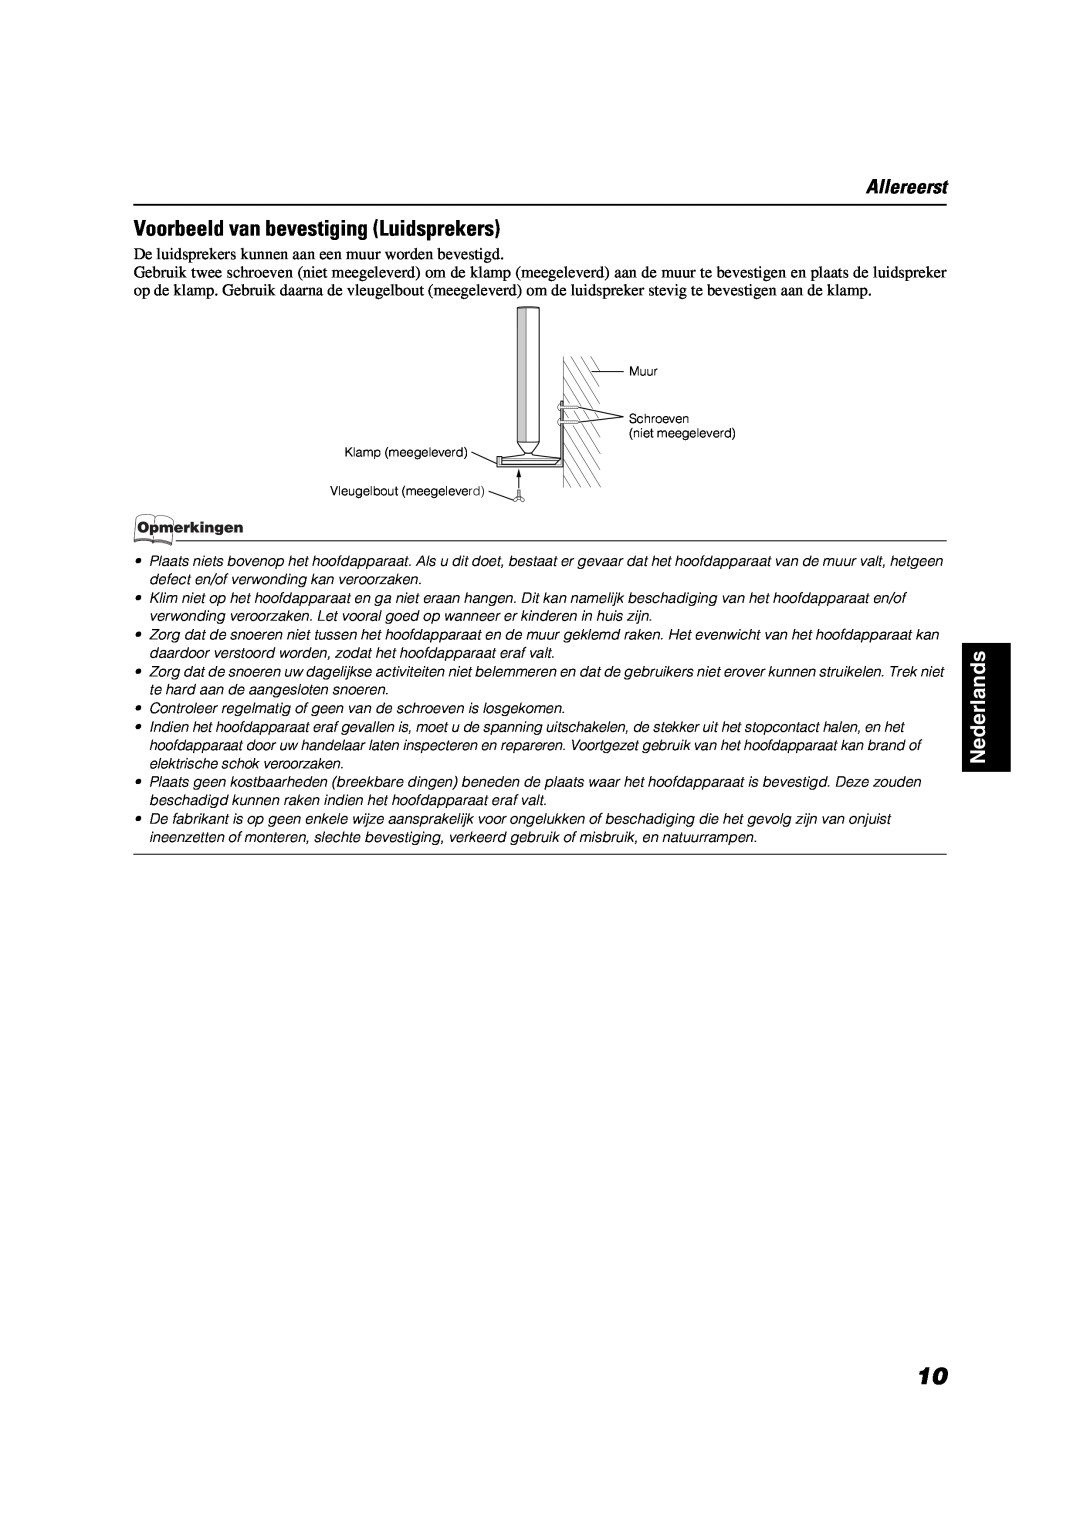 JVC VS-DT2000R manual Voorbeeld van bevestiging Luidsprekers, Allereerst, Nederlands, Vleugelbout meegeleverd 